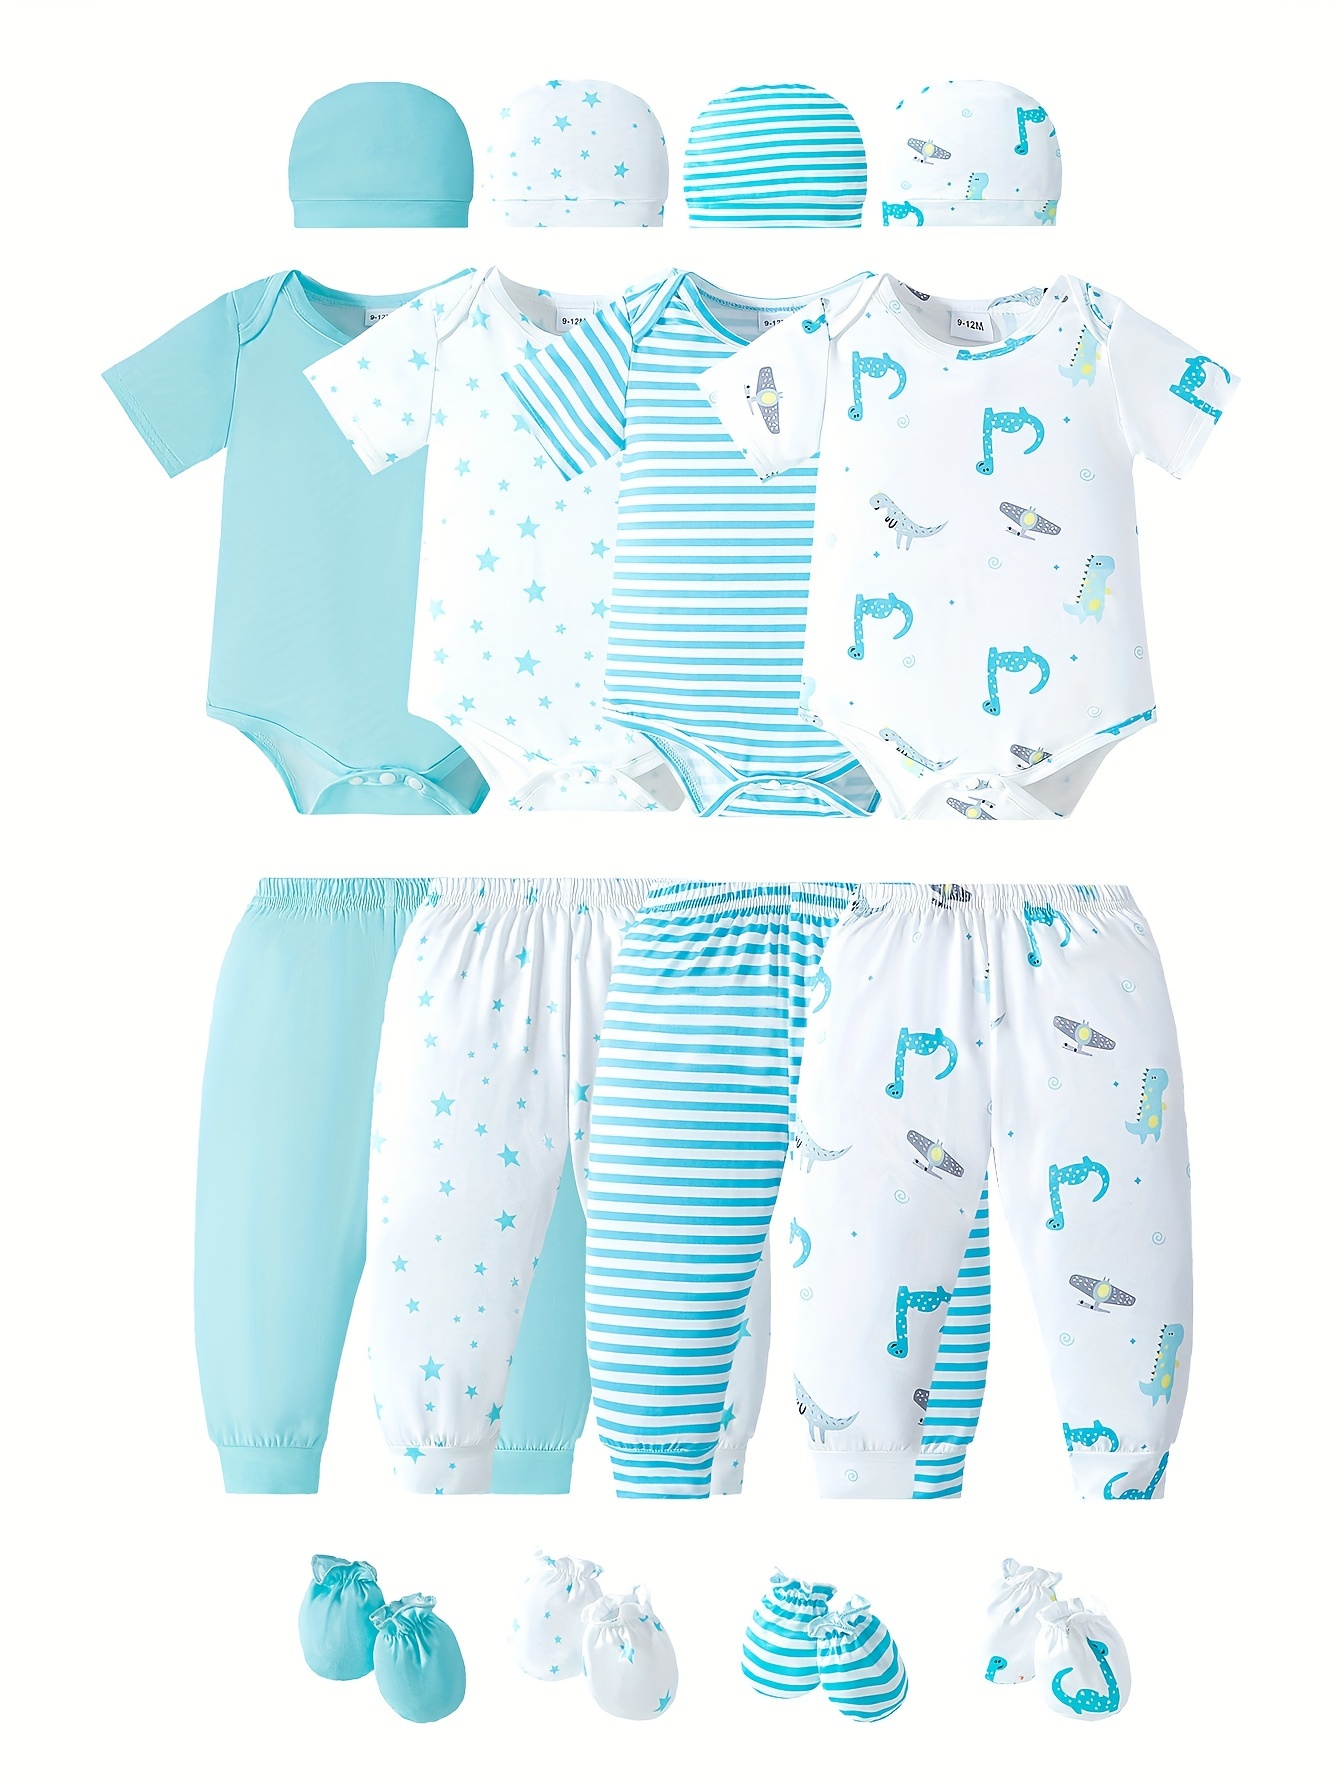 4pcs Comfortable Baby Clothes Set Elastic Gift Outfit Romper Pants